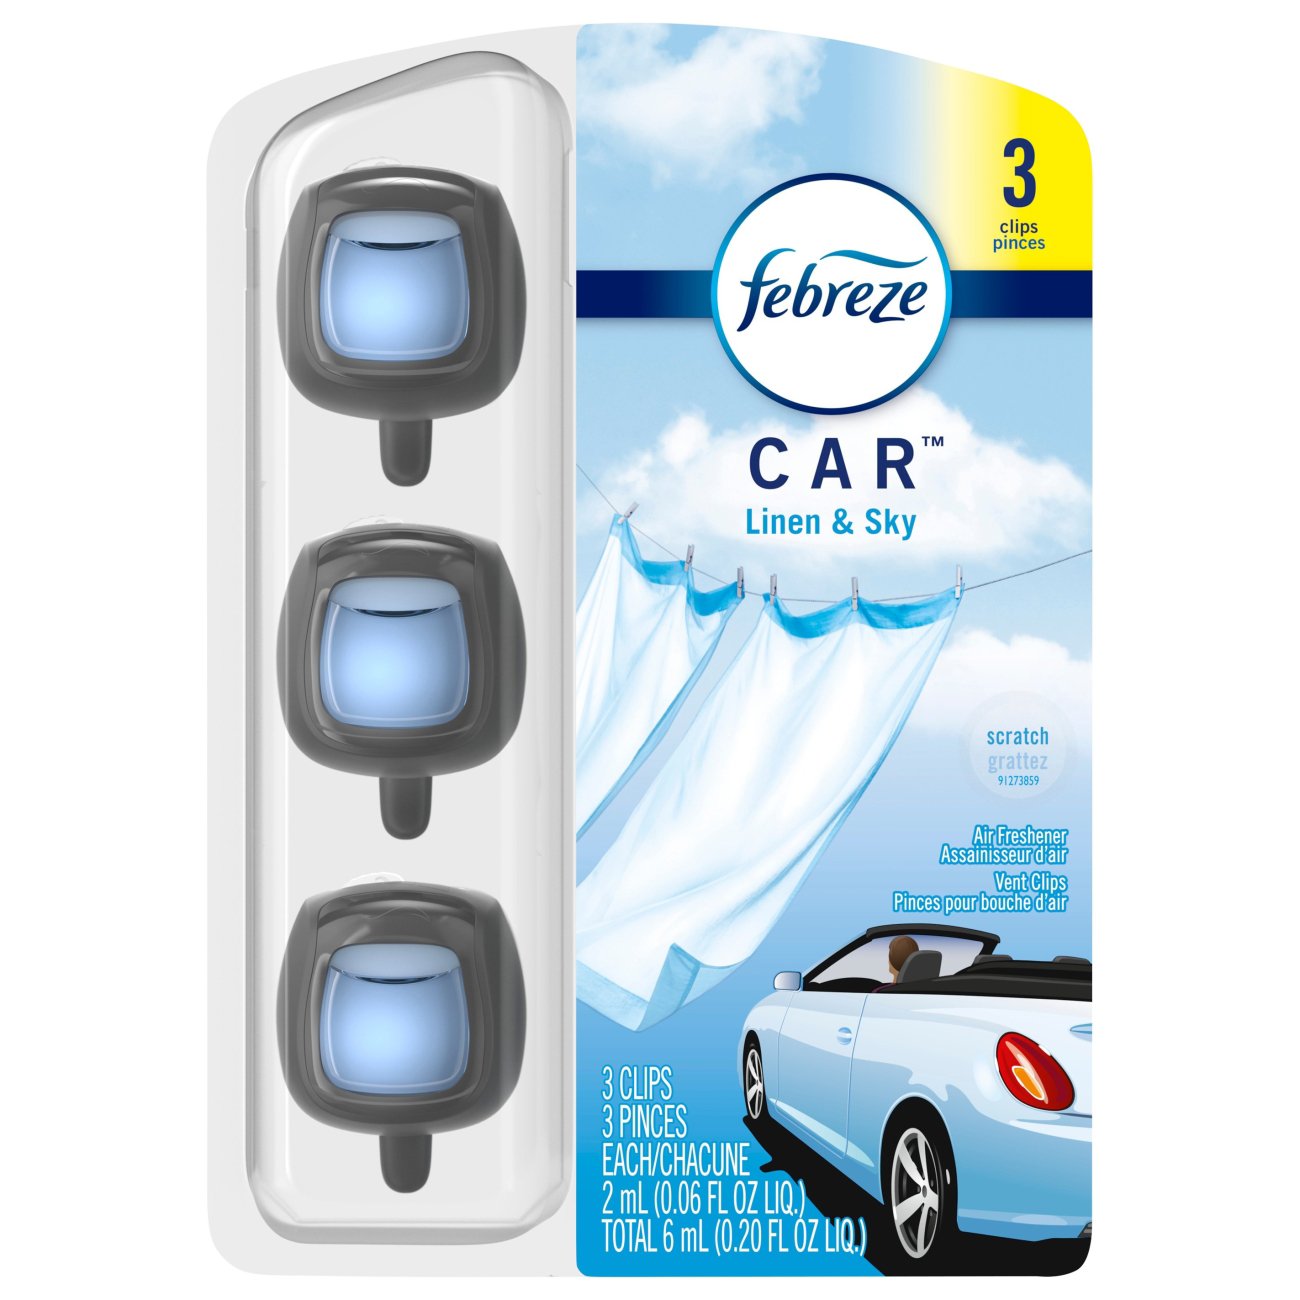 Febreze Car Linen & Sky Air Freshener Vent Clips - Shop Air Fresheners at  H-E-B